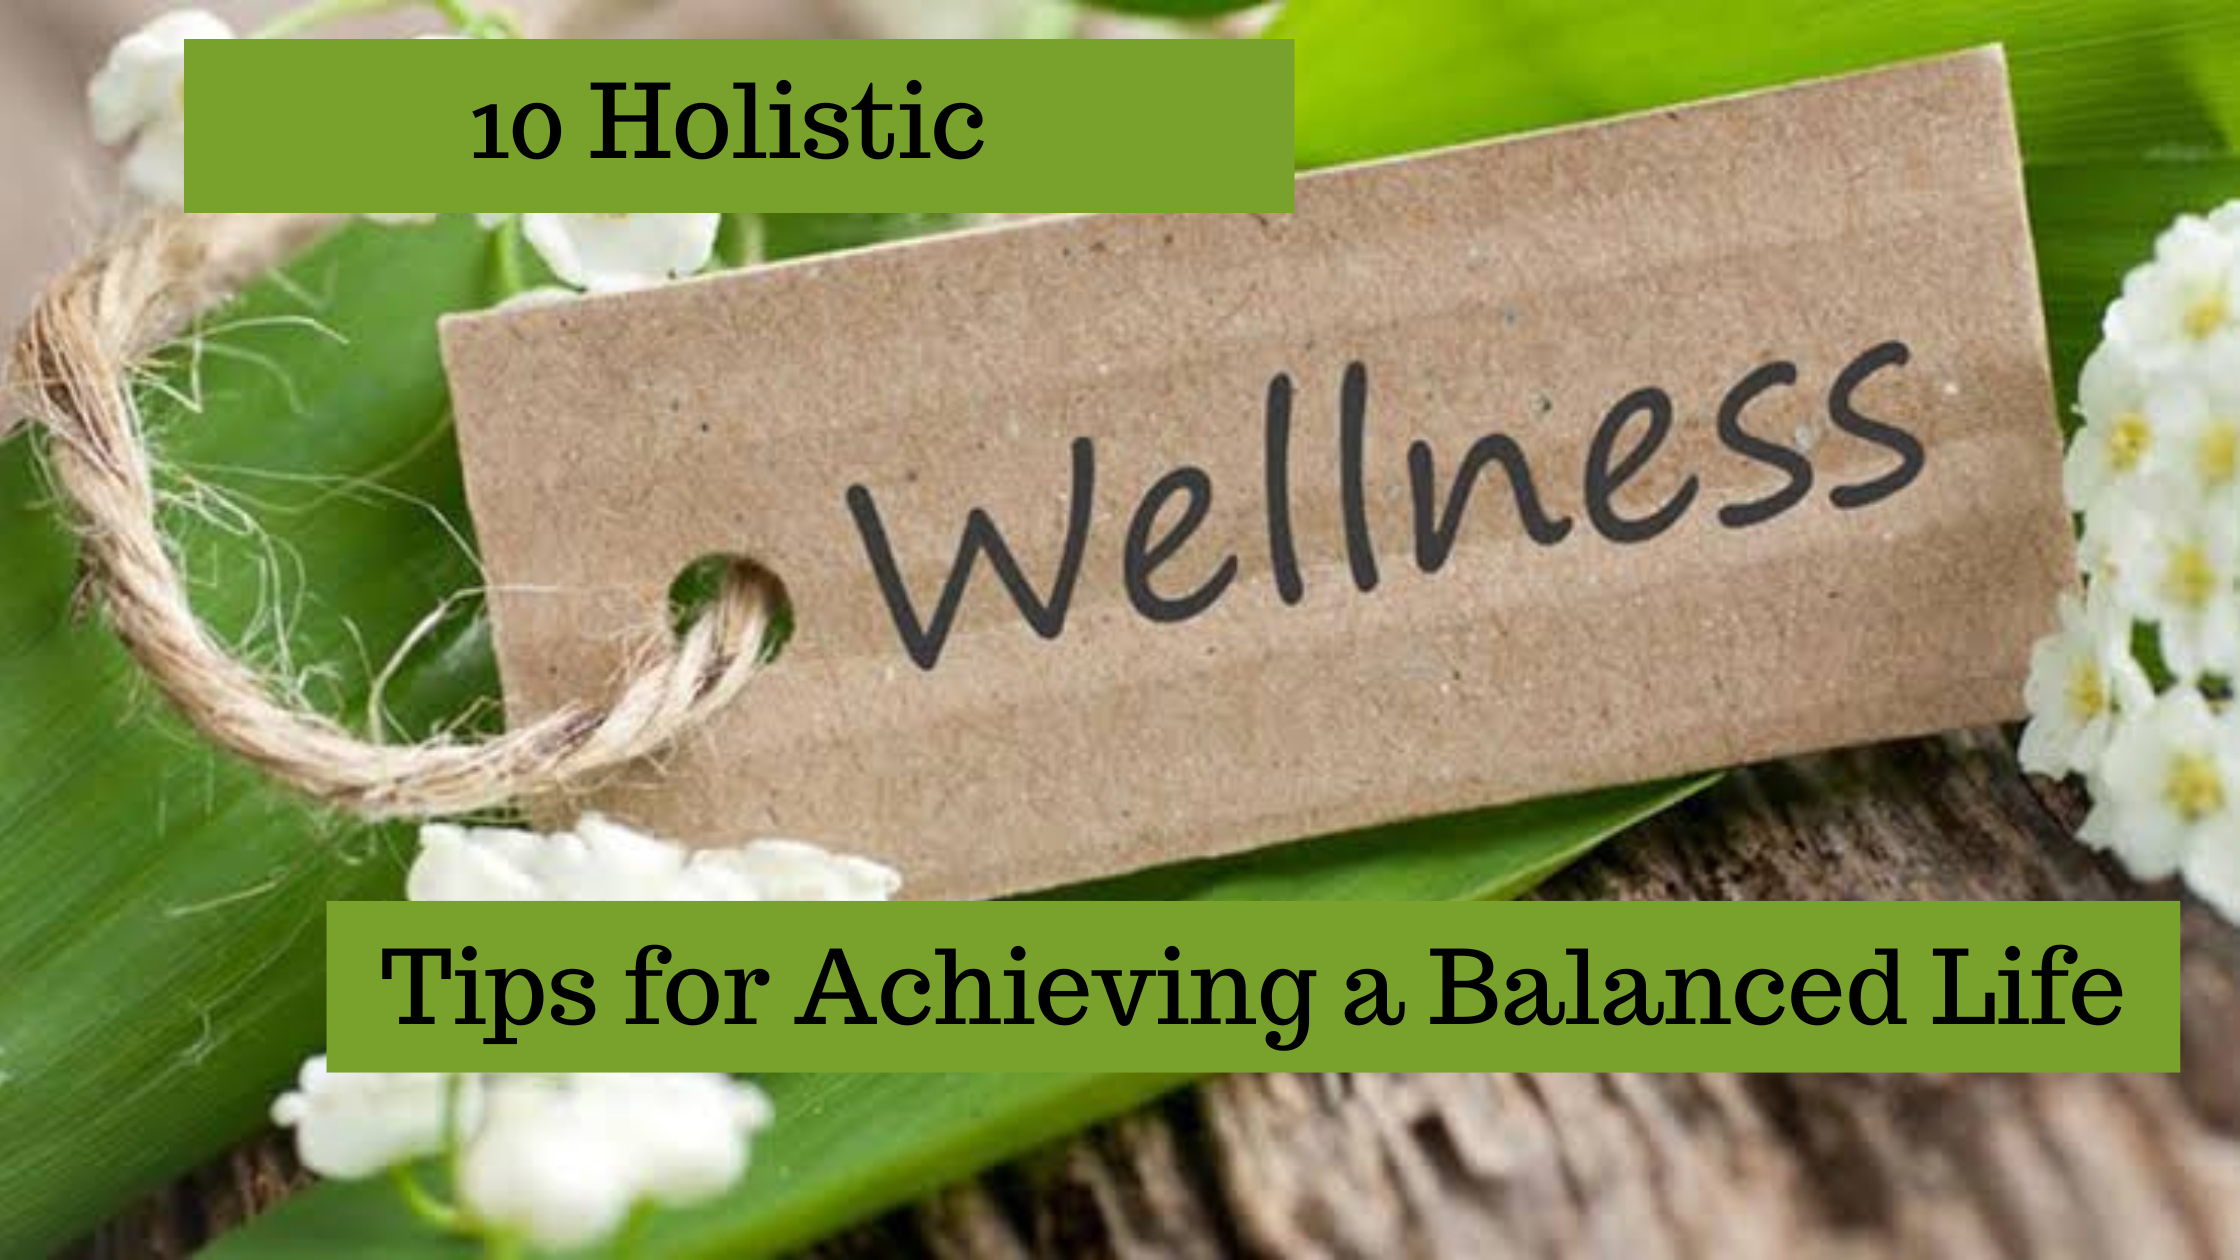 10 Holistic Wellness Tips for Achieving a Balanced Life